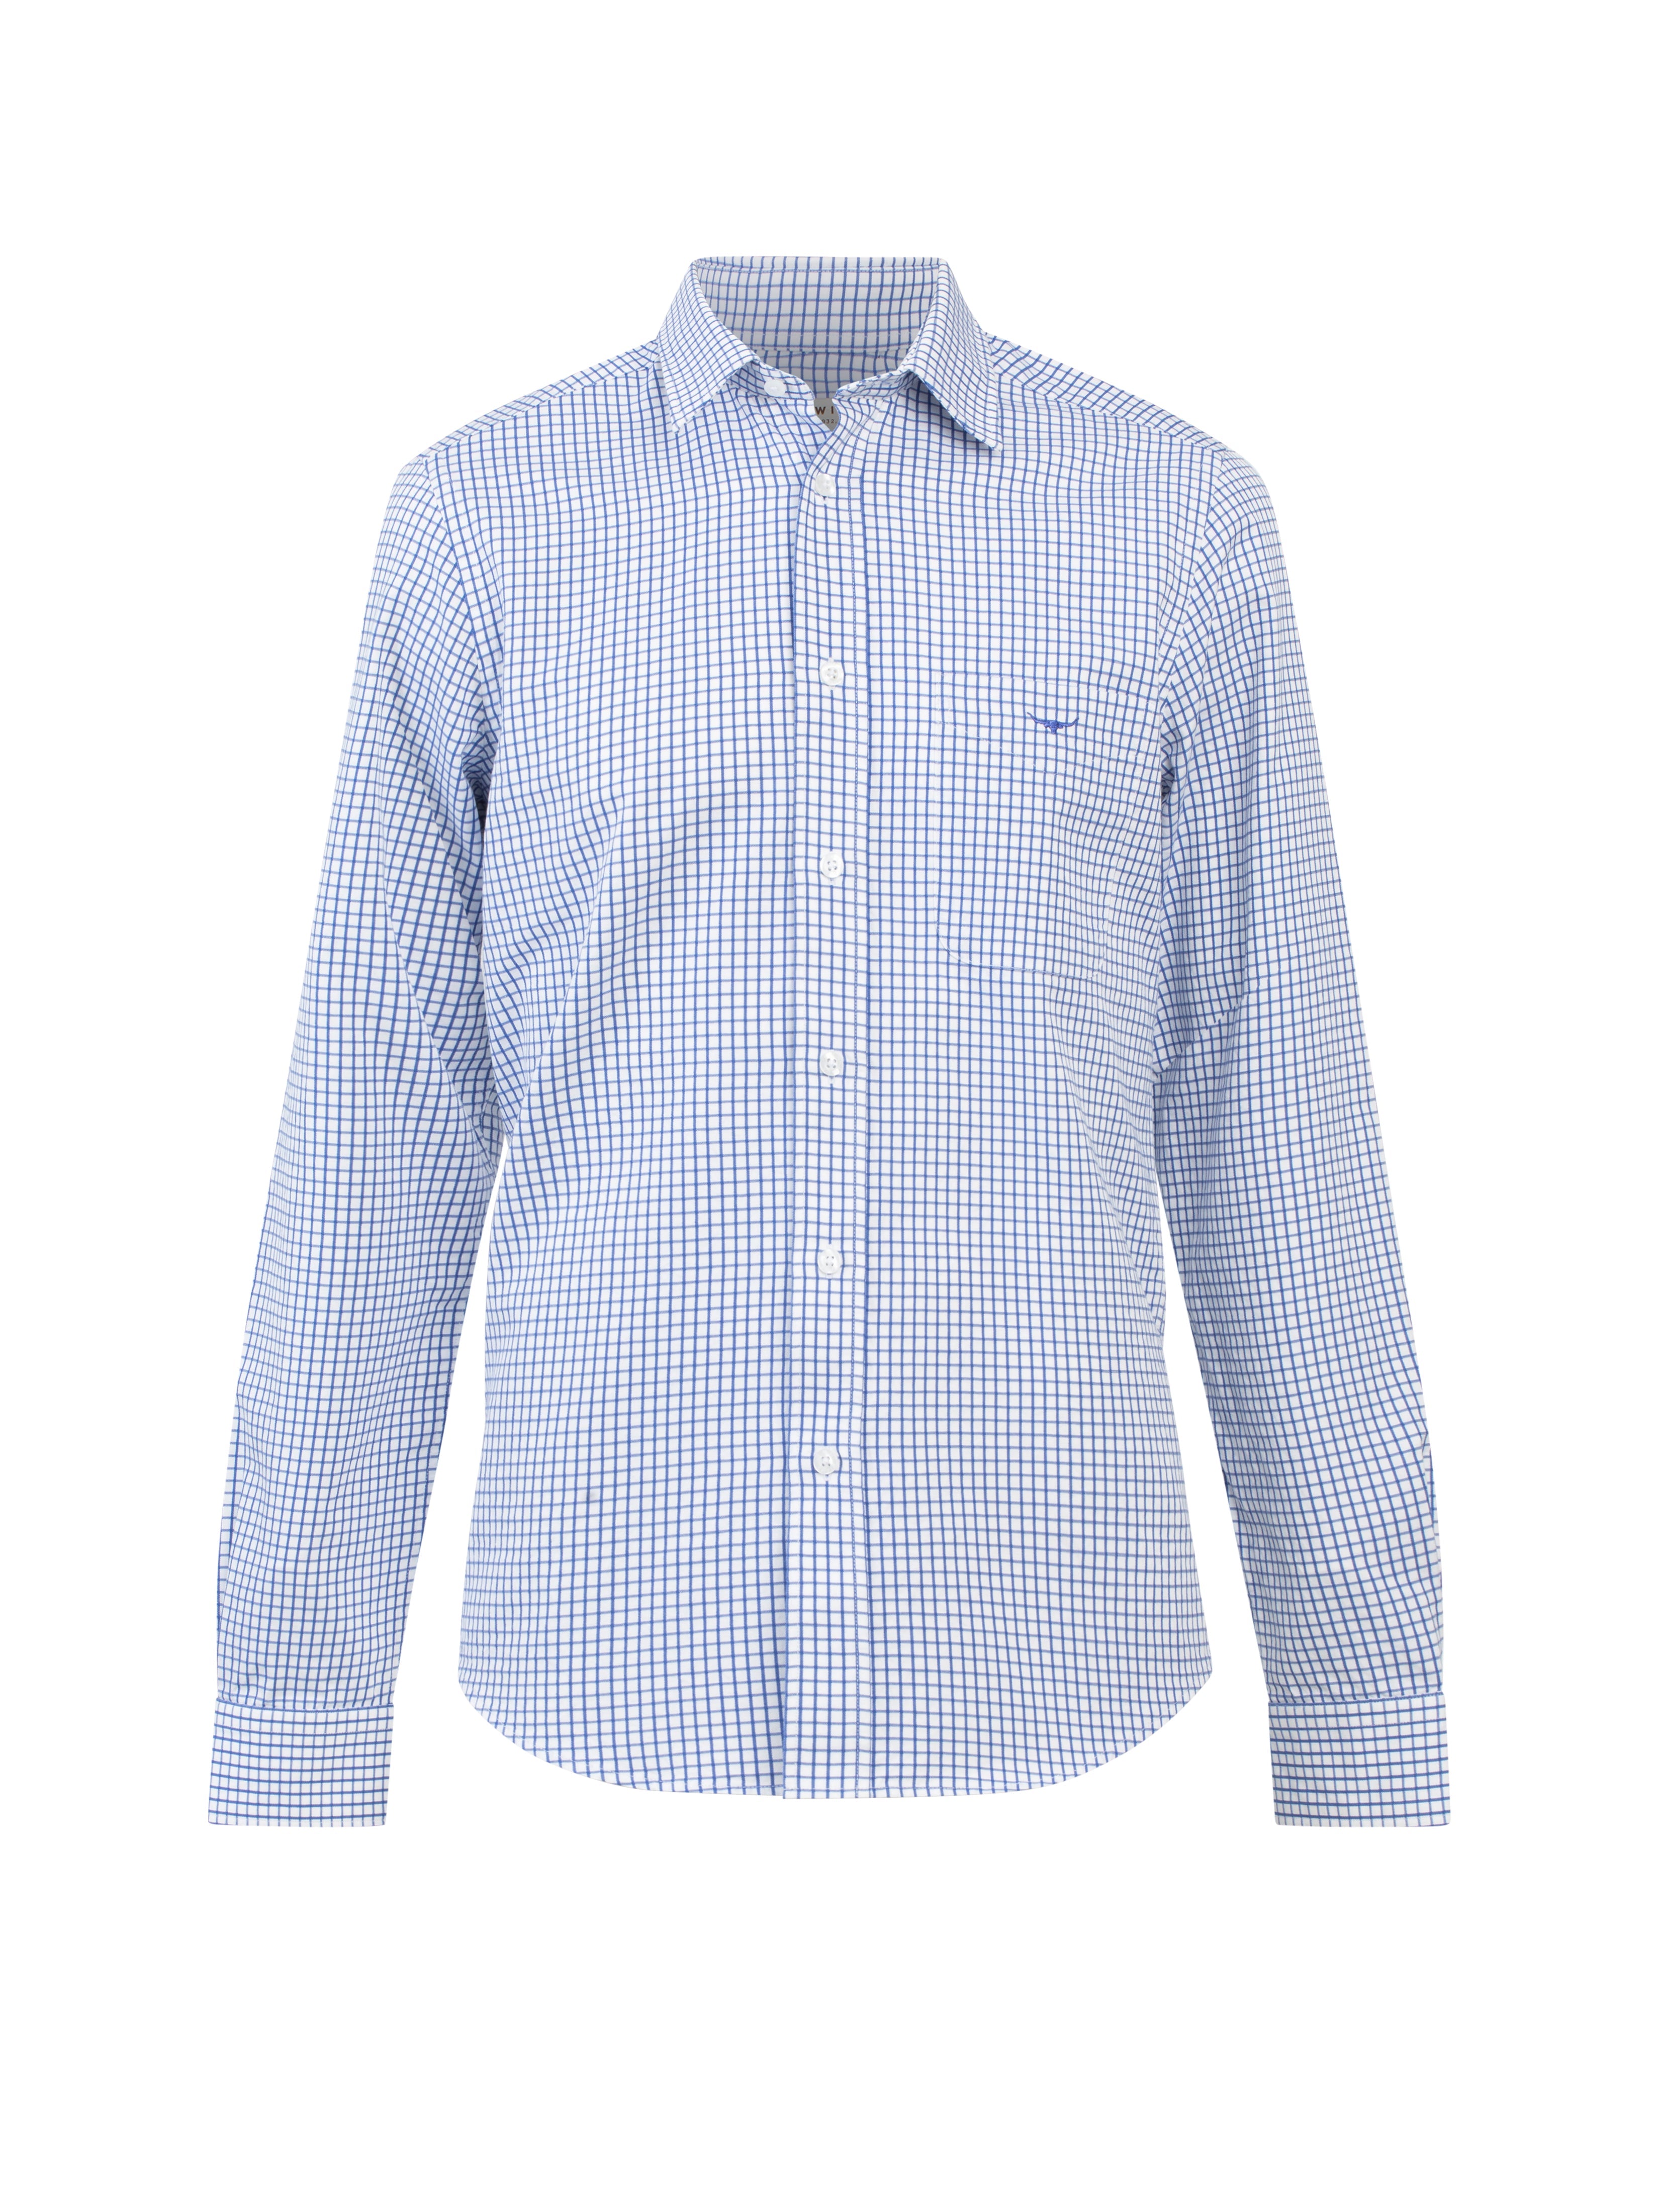 Jervis slim fit shirt - white / blue Long Sleeve Shirts R.M.